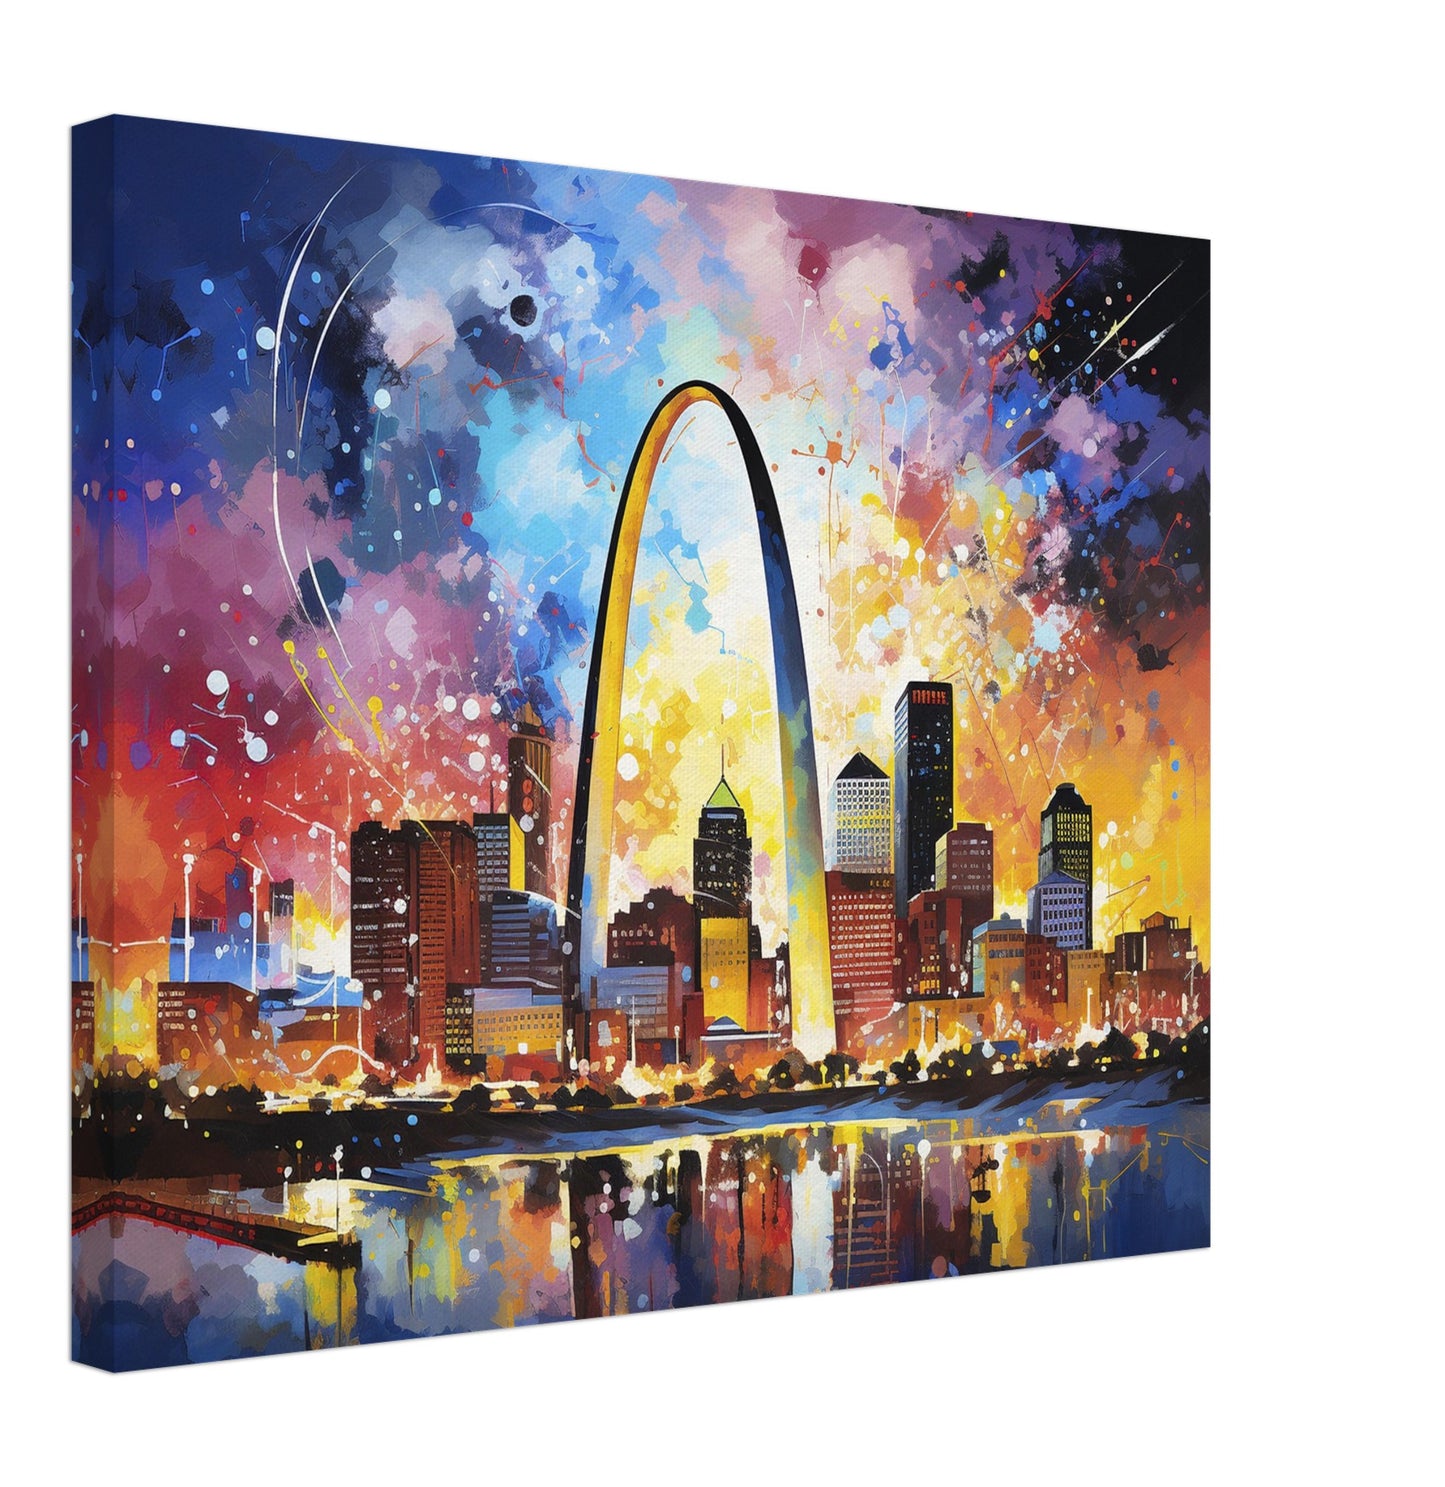 St Louis - Canvas - Gateway To Epic